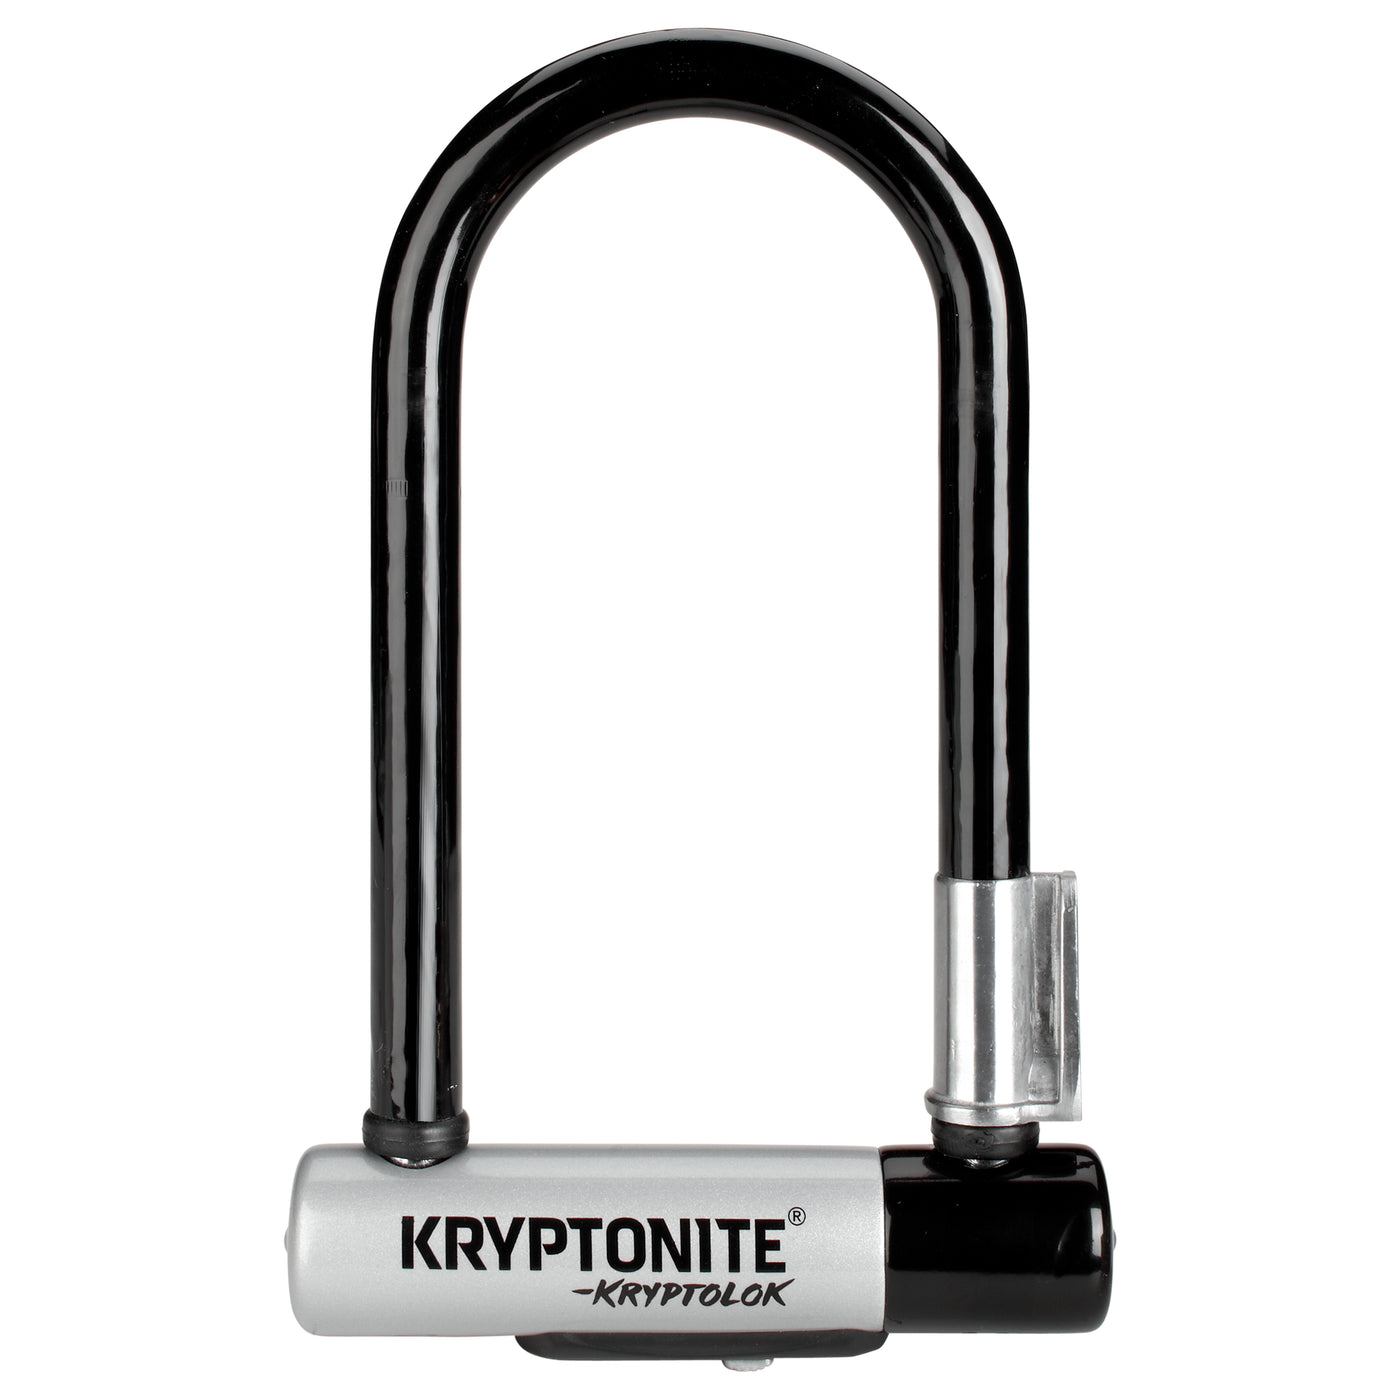 Kryptonite Kryptolok Mini U-Lock with Flexframe bracket